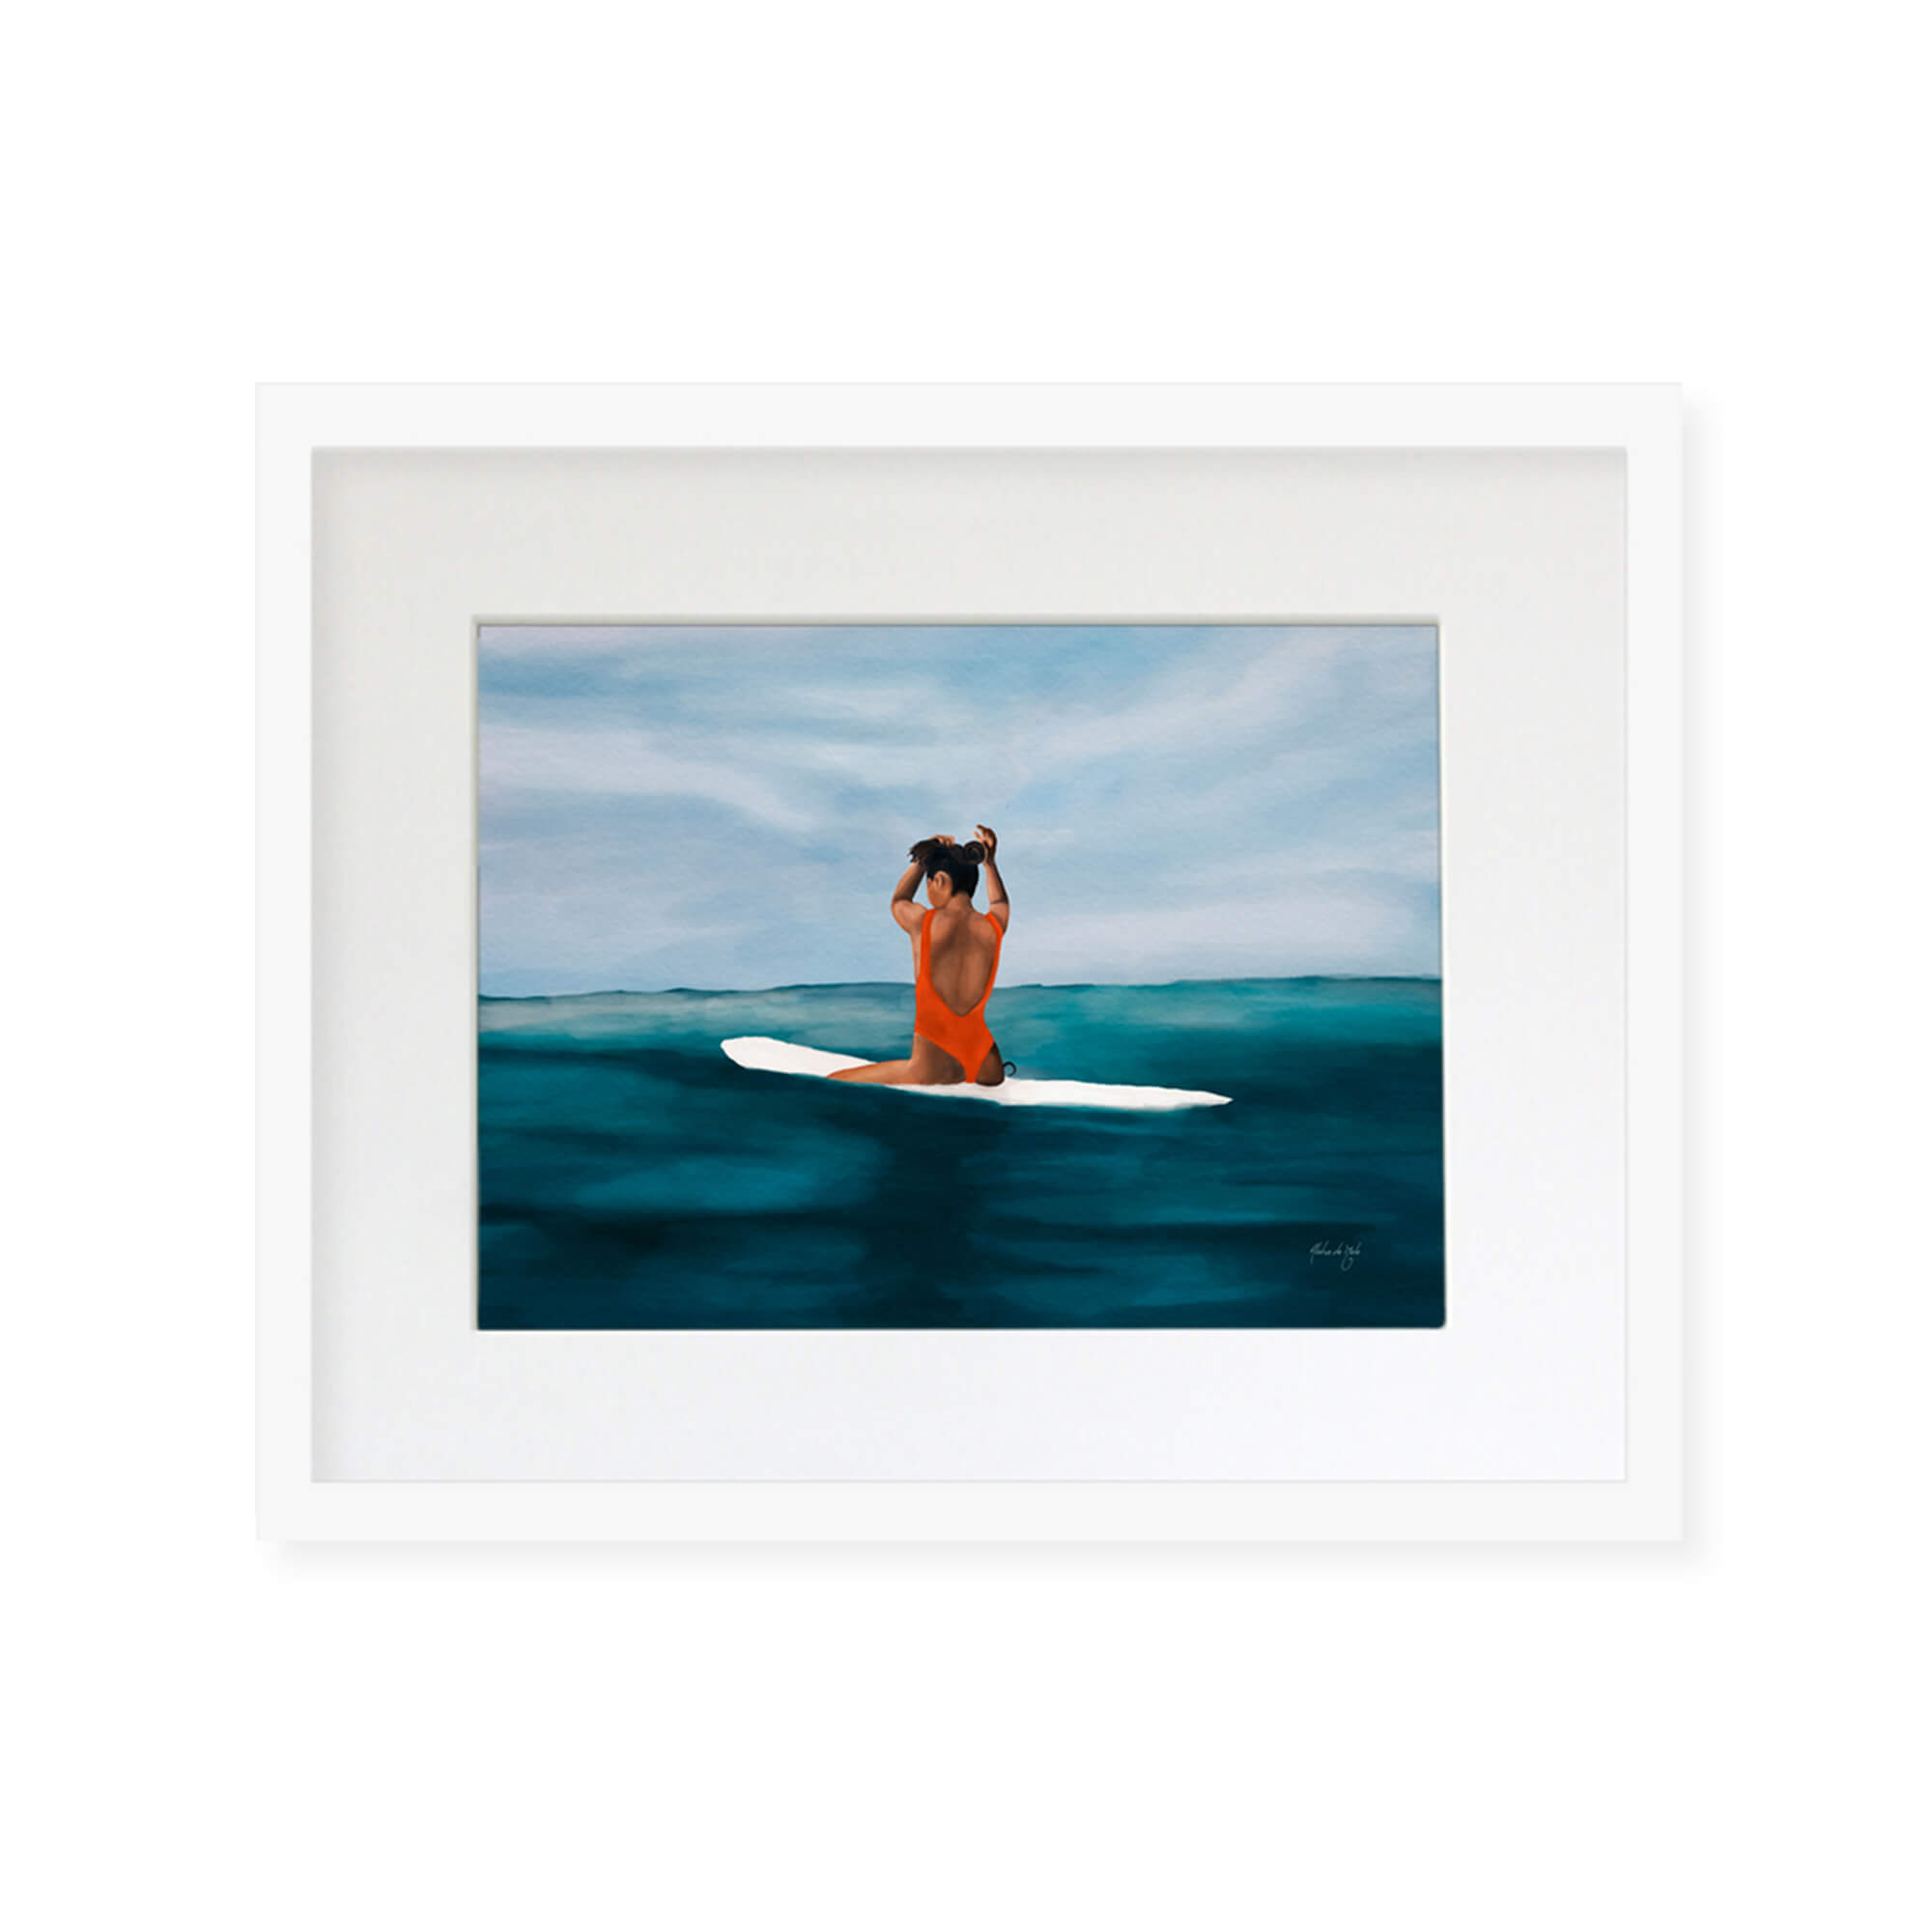 A framed matted art print of a woman peacefully surfing by Hawaii artist Aloha De Mele